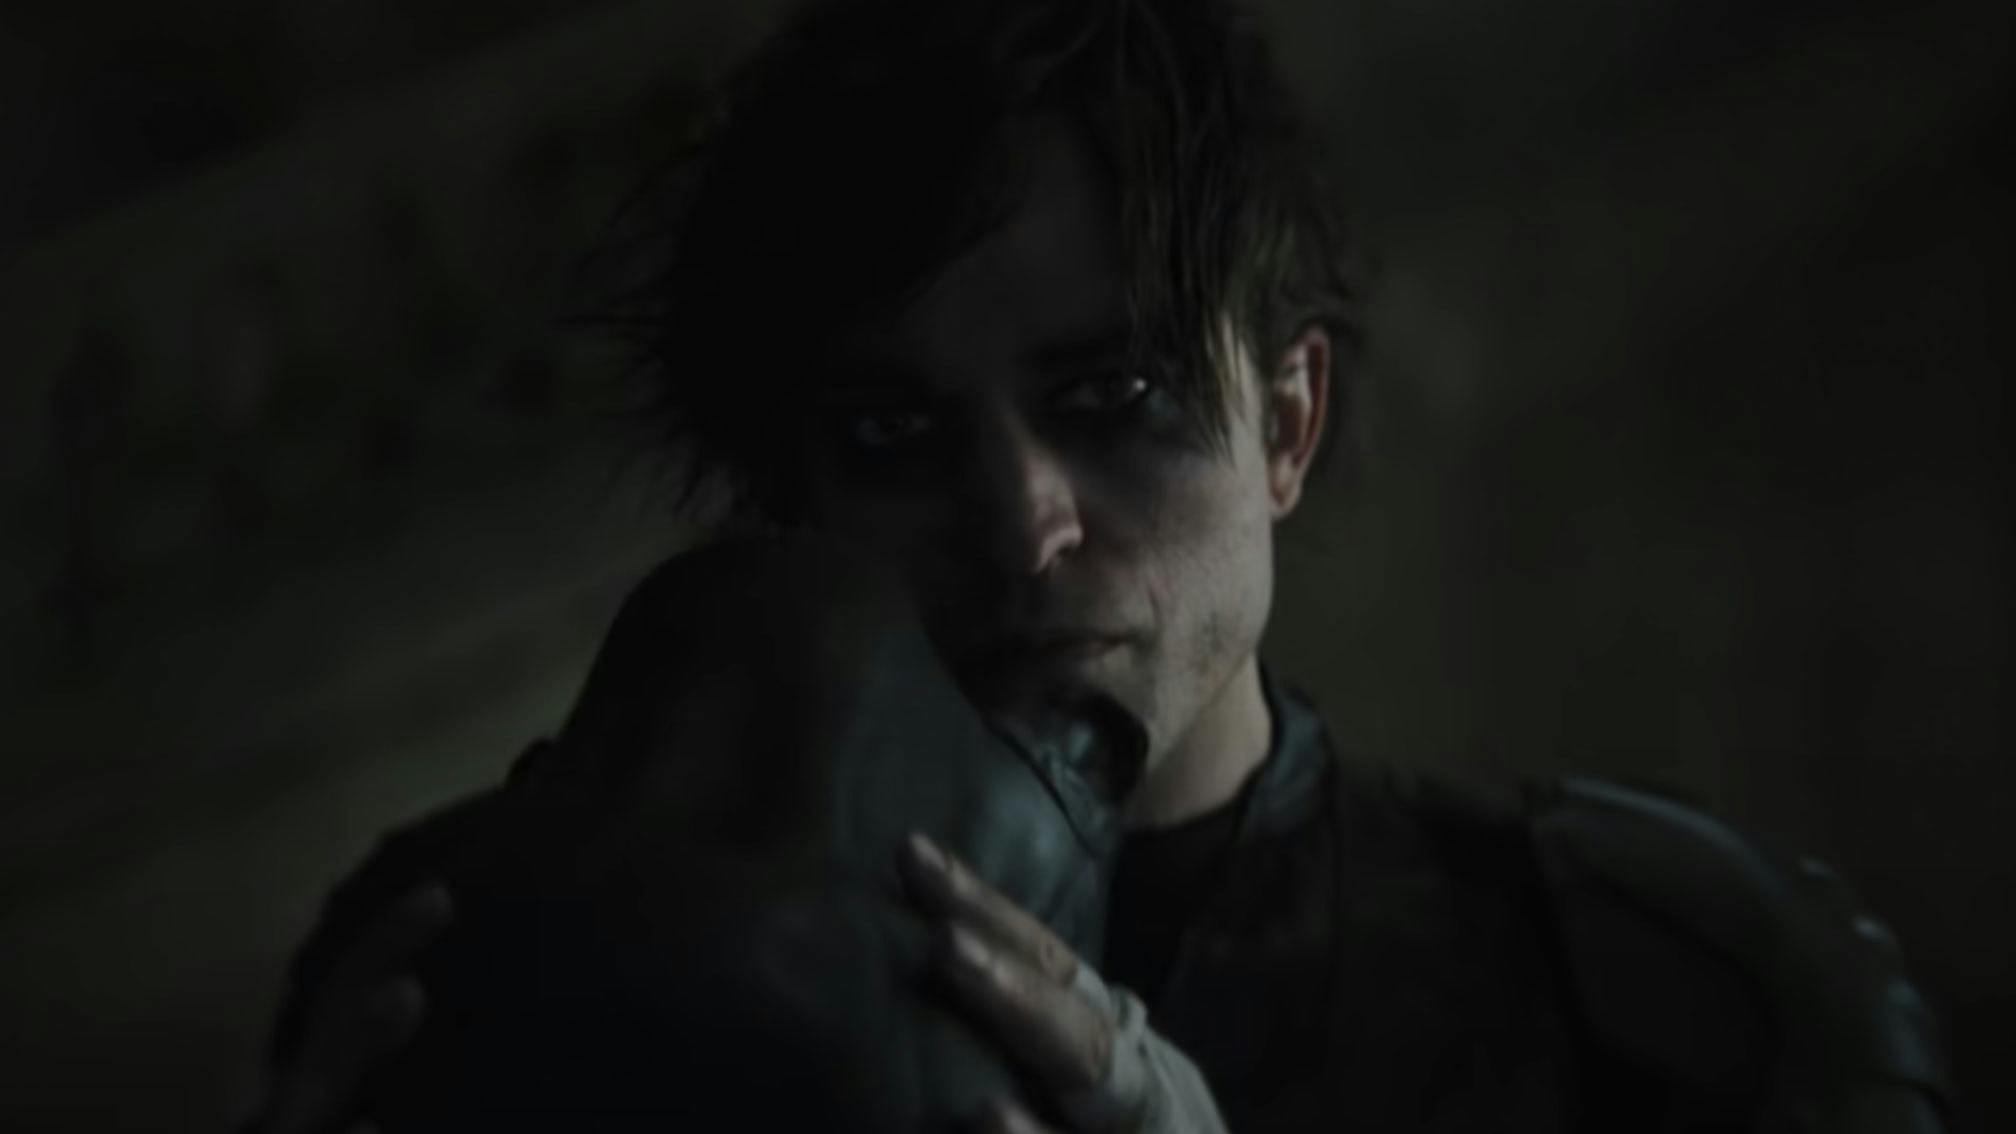 The Batman director explains Robert Pattinson’s emo eyeliner, Kurt Cobain influence